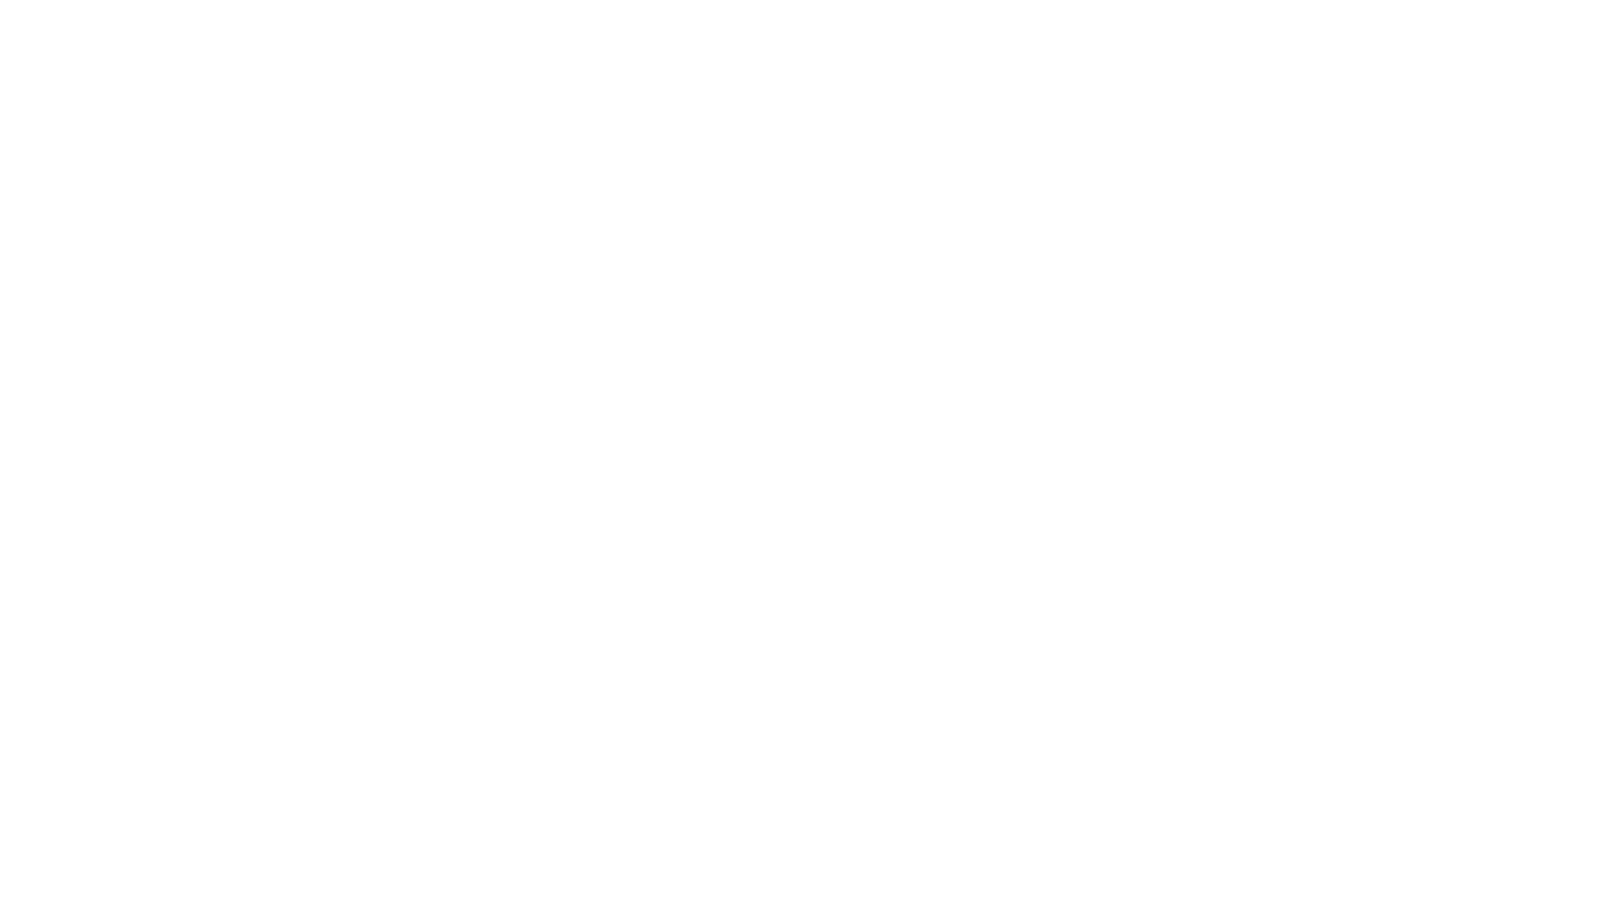 Today we will enjoy another Lucian DJ SET accompanied by the images of Mosquito Hotel Zona Colonial.
Enjoy!

Playlist:
Samuel Barber - Adagio for Strings (chillion remix)
FRUTA FRESCA - CARLOS VIVES ( TOM WILDE REMIX)
Grace Jones - Libertango (Viktor Martini Remix)
Smells Like Teen Spirit (Tiger Toast Remix) - Nirvana 
Losing My Religion - REM [Deep House Remix]
Belinda Carlisle - Heaven Is A Place On Earth 2k20 (Afgo Remix)
Kim Karnes - Bette Davis Eyes (FABIO LENZI 2K21 REMIX
Don't Fly Away (PNAU Remix) (From The Original Motion Picture Soundtrack ELVIS (Audio))

Contact us 🇨🇦 🇺🇸 We Speak English / French /🇪🇸 Spanish  🏝

📞WhatsApp: +1 829 525 1782 | Office: +1 289 910 0877 | Toll Free 1 888 410 0264

▬ Subscribe ▬▬▬▬▬▬▬▬▬▬▬▬▬▬▬🌴🌴🌴🌴🌴
🌐https://www.youtube.com/channel/UCFyL5BMqFzAFVvqbAjkwPiw?sub_confirmation=1
▬ Social Media ▬▬▬▬▬▬▬▬▬▬▬▬▬▬▬ 👋
🌐https://linktr.ee/godominicanlife

► Facebook: https://web.facebook.com/LasTerrenasLife/
► Facebook: https://www.facebook.com/godominicanlife
► Instagram: https://www.instagram.com/lasterrenaslifedr/
► Instagram: https://www.instagram.com/godominican
► LinkedIn: https://www.linkedin.com/in/steven-hattie-9211281b4/
► Website: https://www.lasterrenaslife.com
► Website: https://www.godominicanlife.com

▬ Tag's ▬▬▬▬▬▬▬▬▬▬▬▬▬▬▬
#GoDominicanLife #GoDomLife #LucianMix #Invest #DominicanRepublic #Solutions #Retire #BuyLand #Caribbean #Listings #LuxuryListing #Tips #BeachLife #Realtor #PuertoPlata #BeachLife